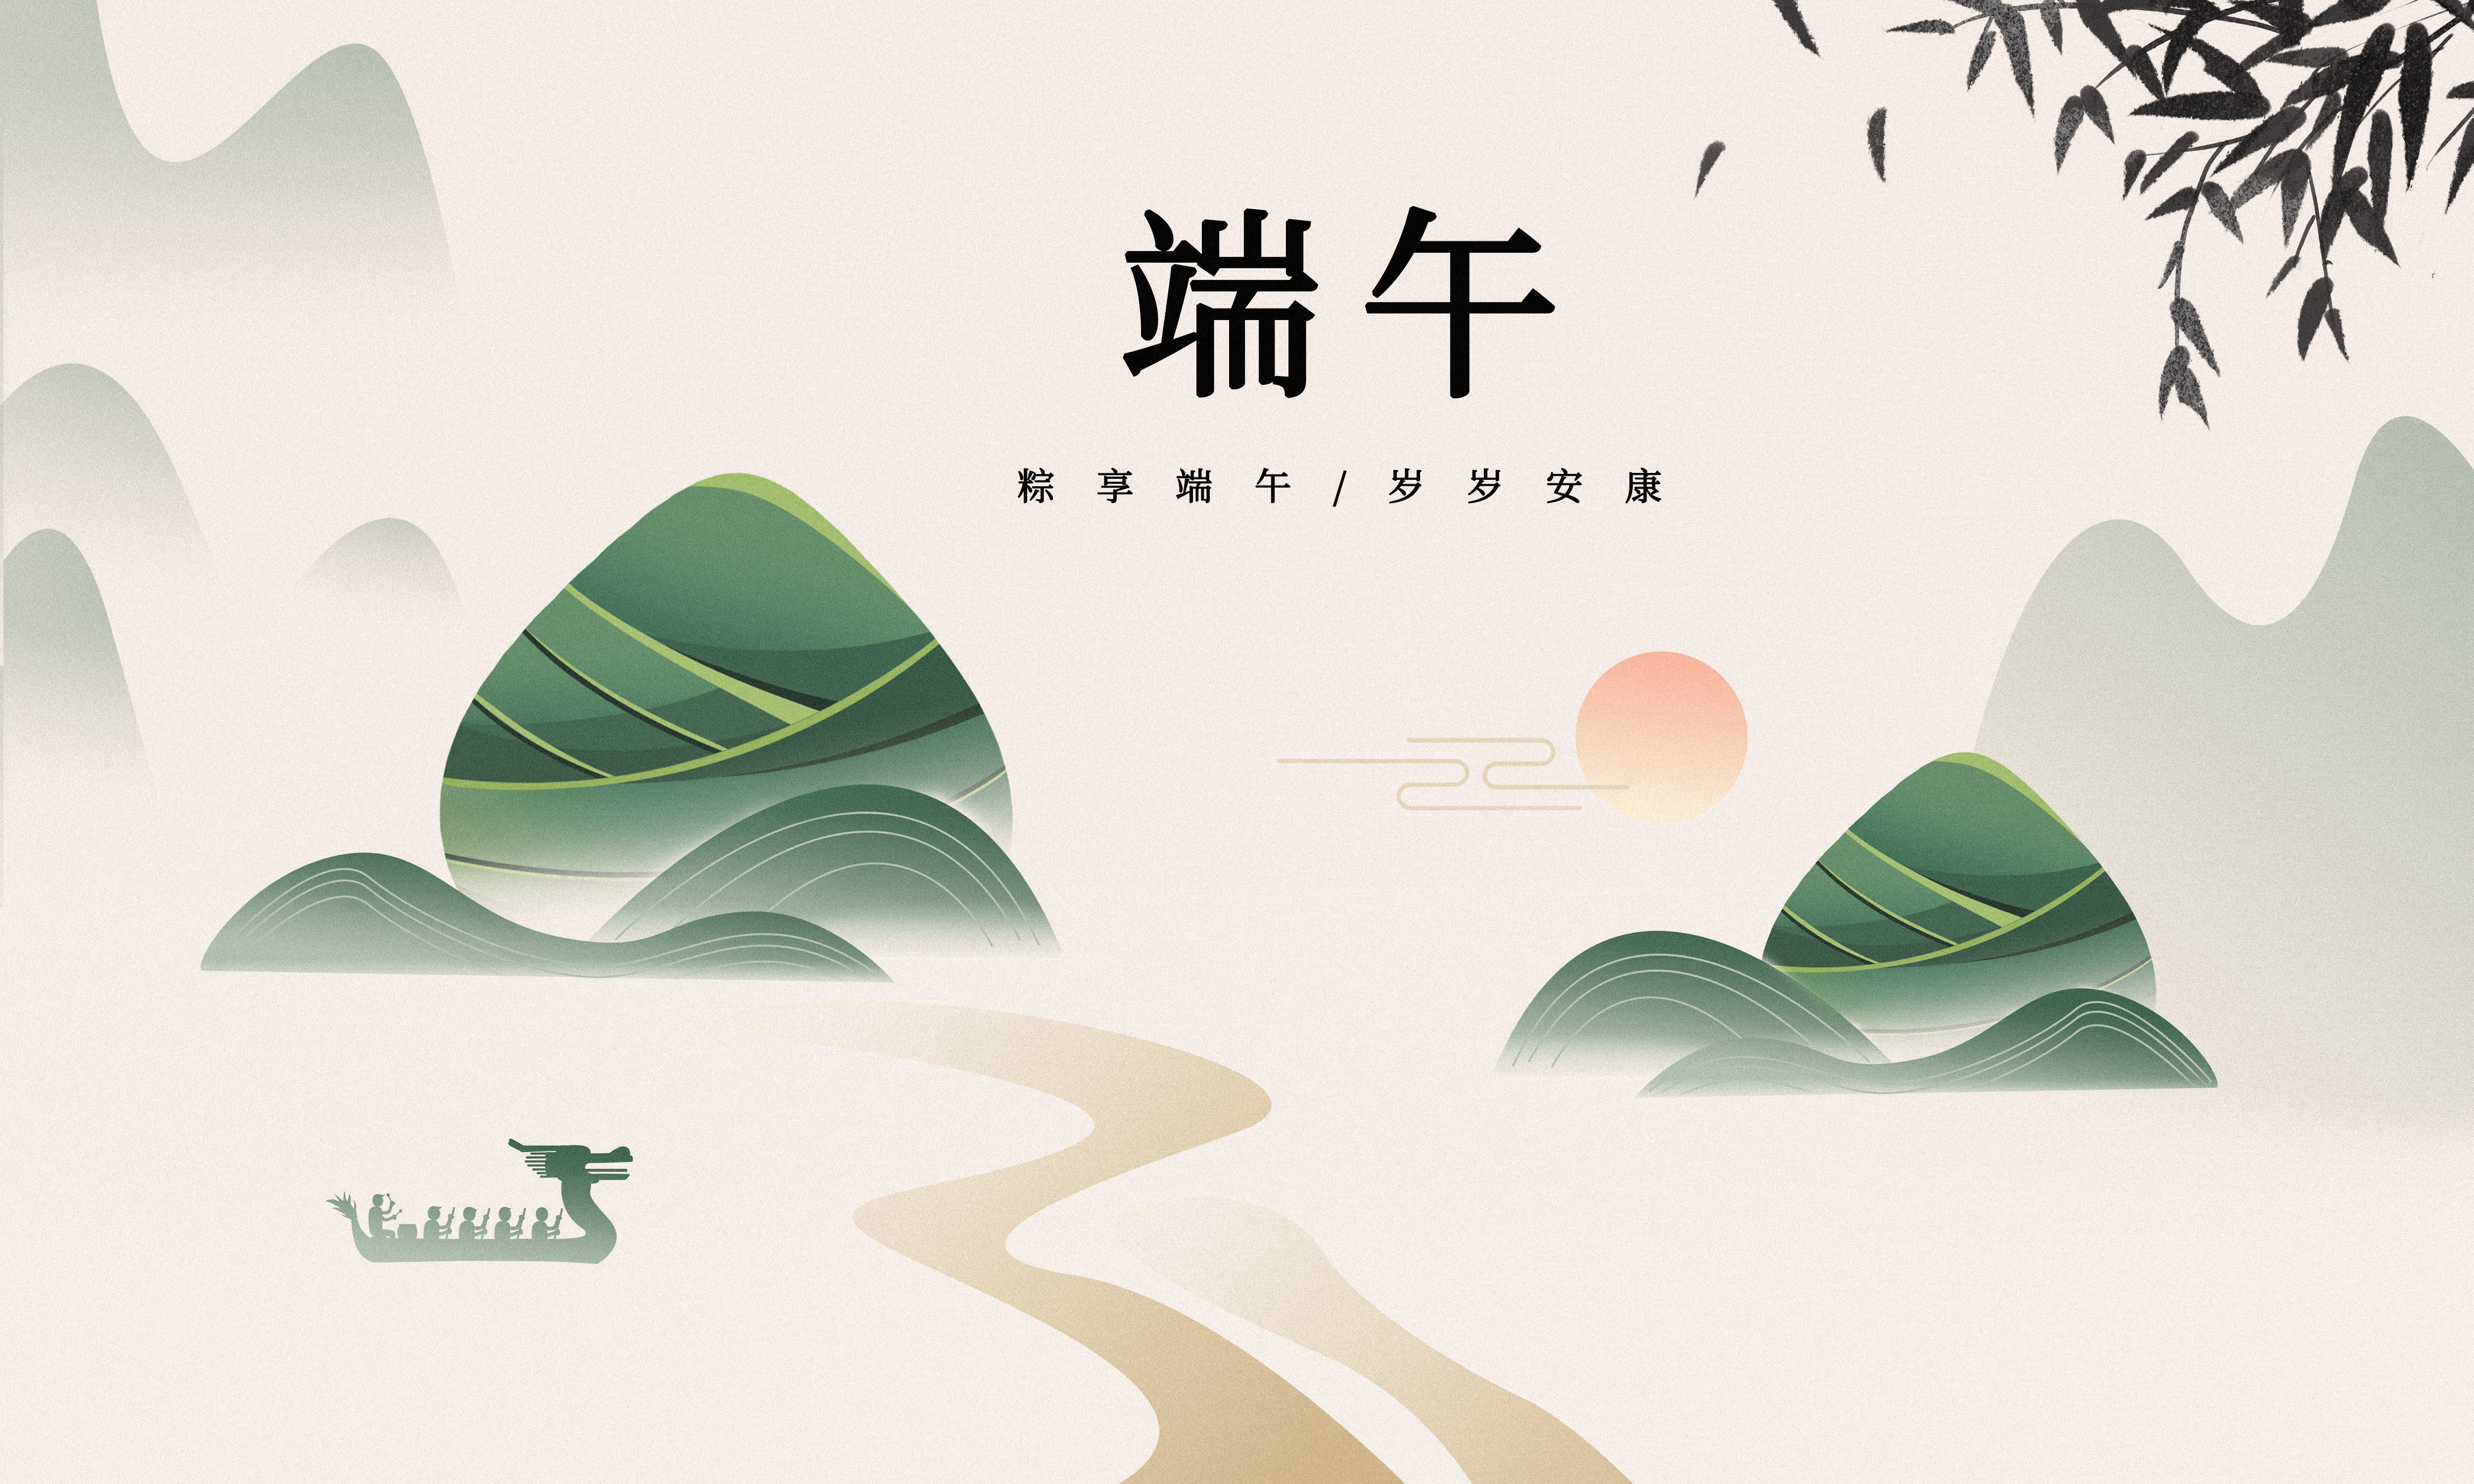 Всяка година се празнува Фестивалът на драконовите лодки и всяка година се носи ароматът на zongzi